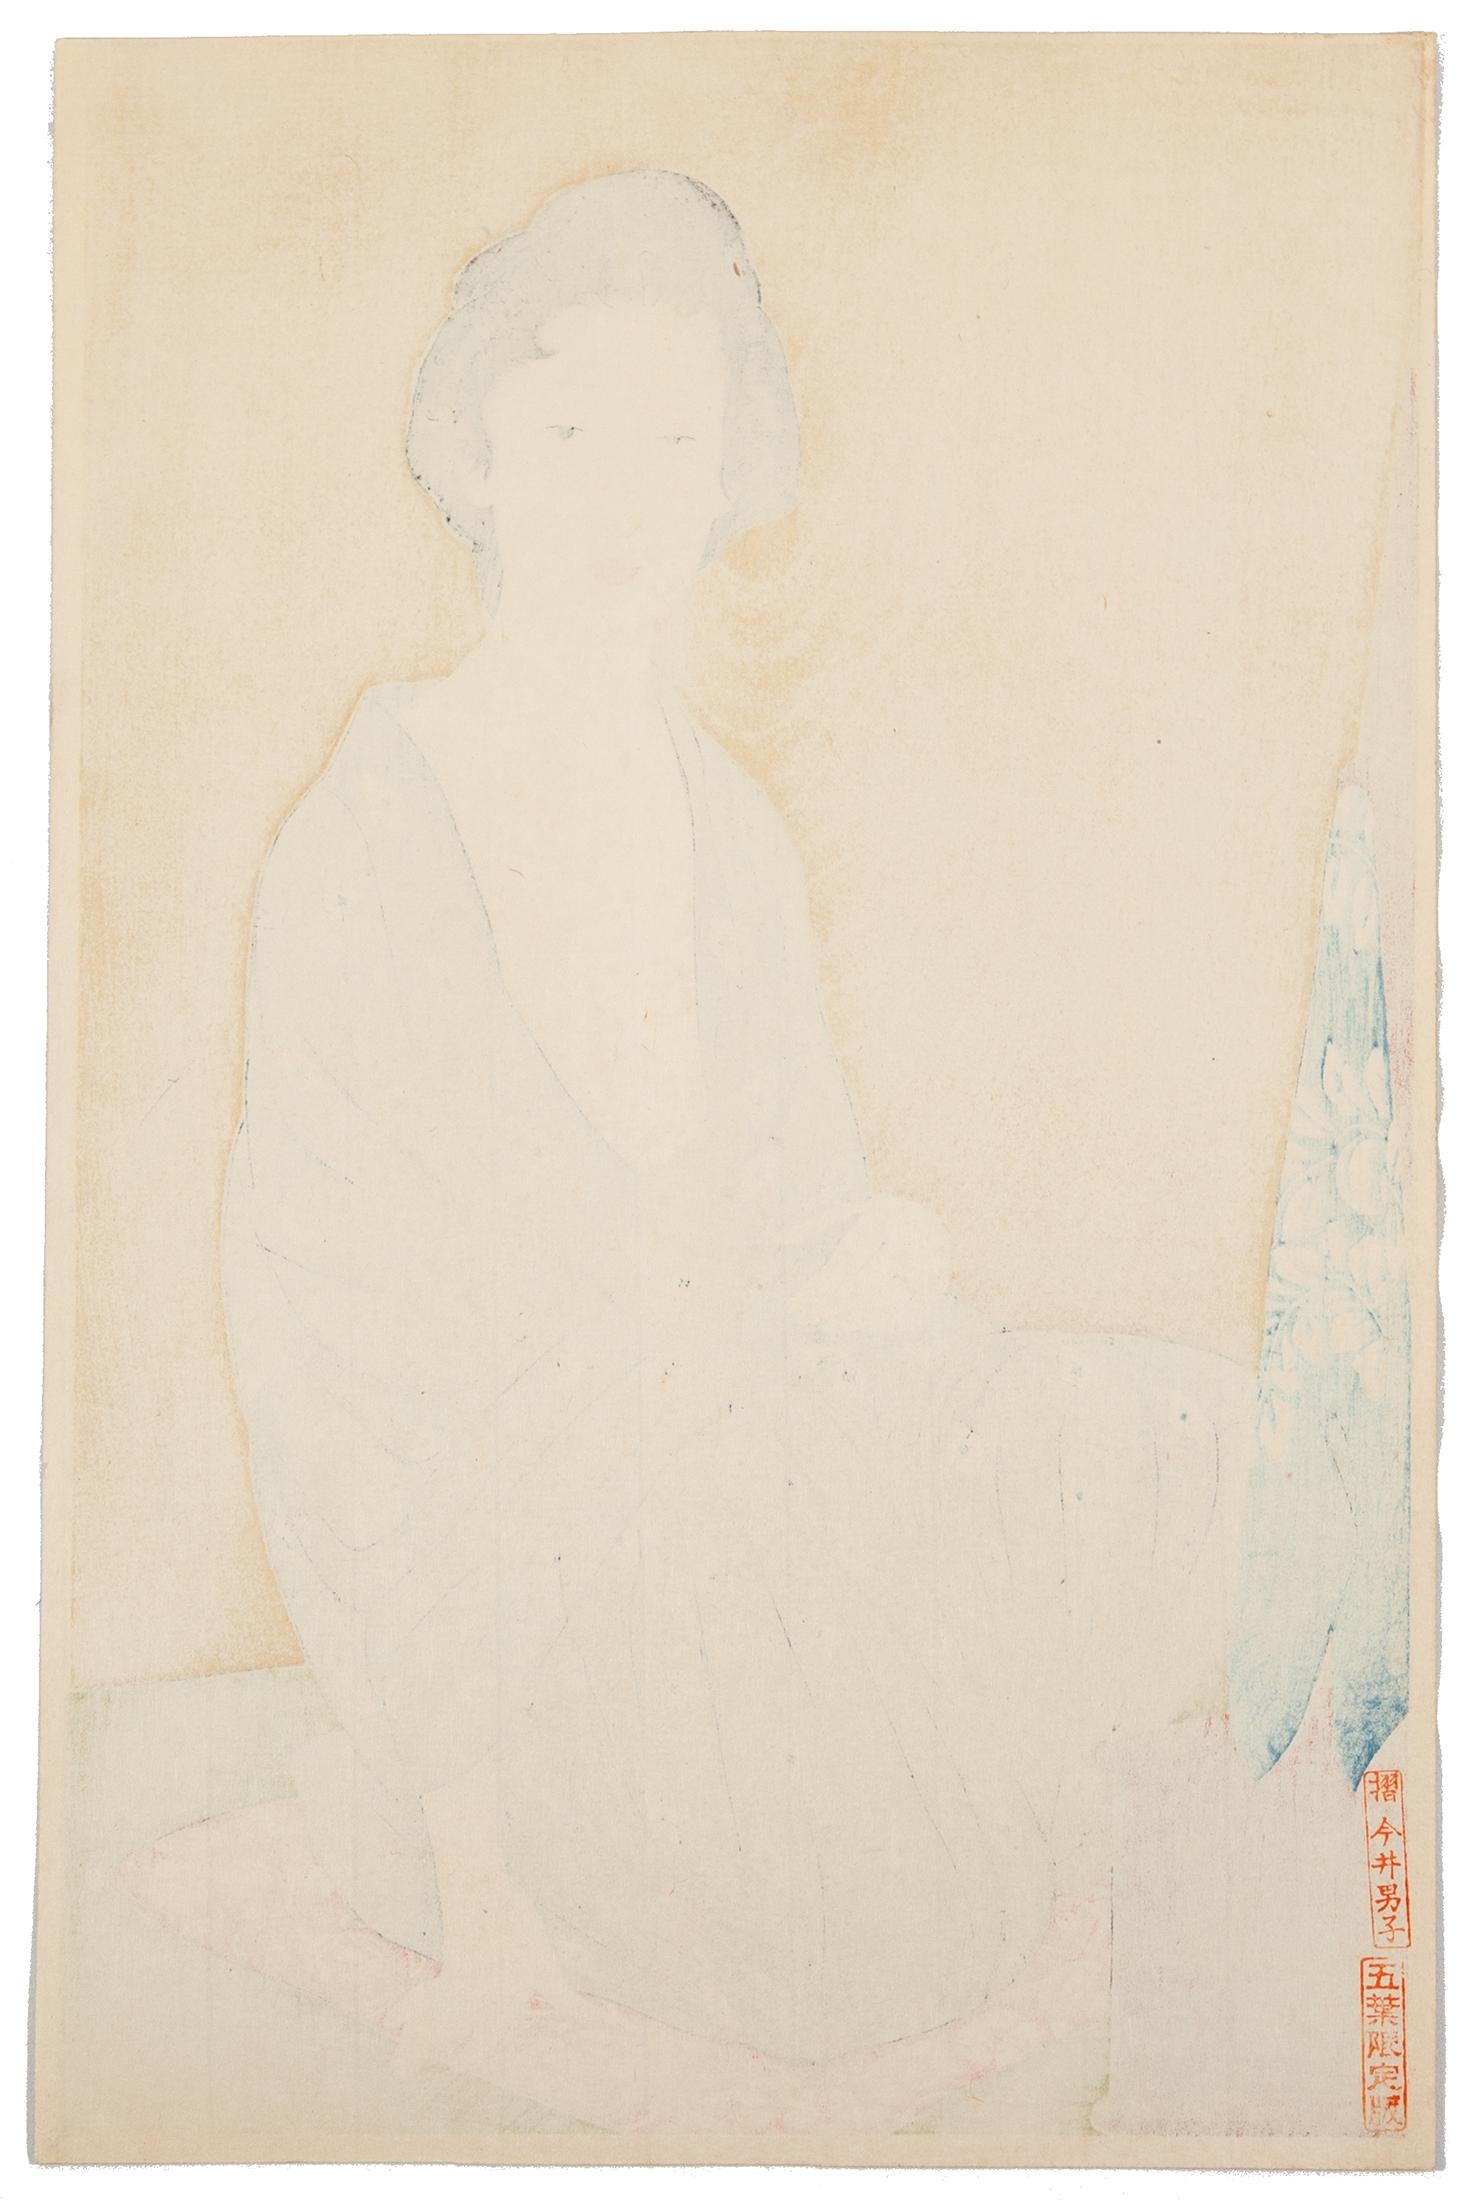 Artist: Goyo Hashiguchi (1880-1921)
Title: A Portrait of Tsuru Nakatani in Summer Kimono
Date: 1920
Edition: Goyo special edition [sealed goyo gentei ban]
Dimensions: 28.9 x 44.7 cm 

Tsuru Nakatani, Goyo's favourite model, rests before a